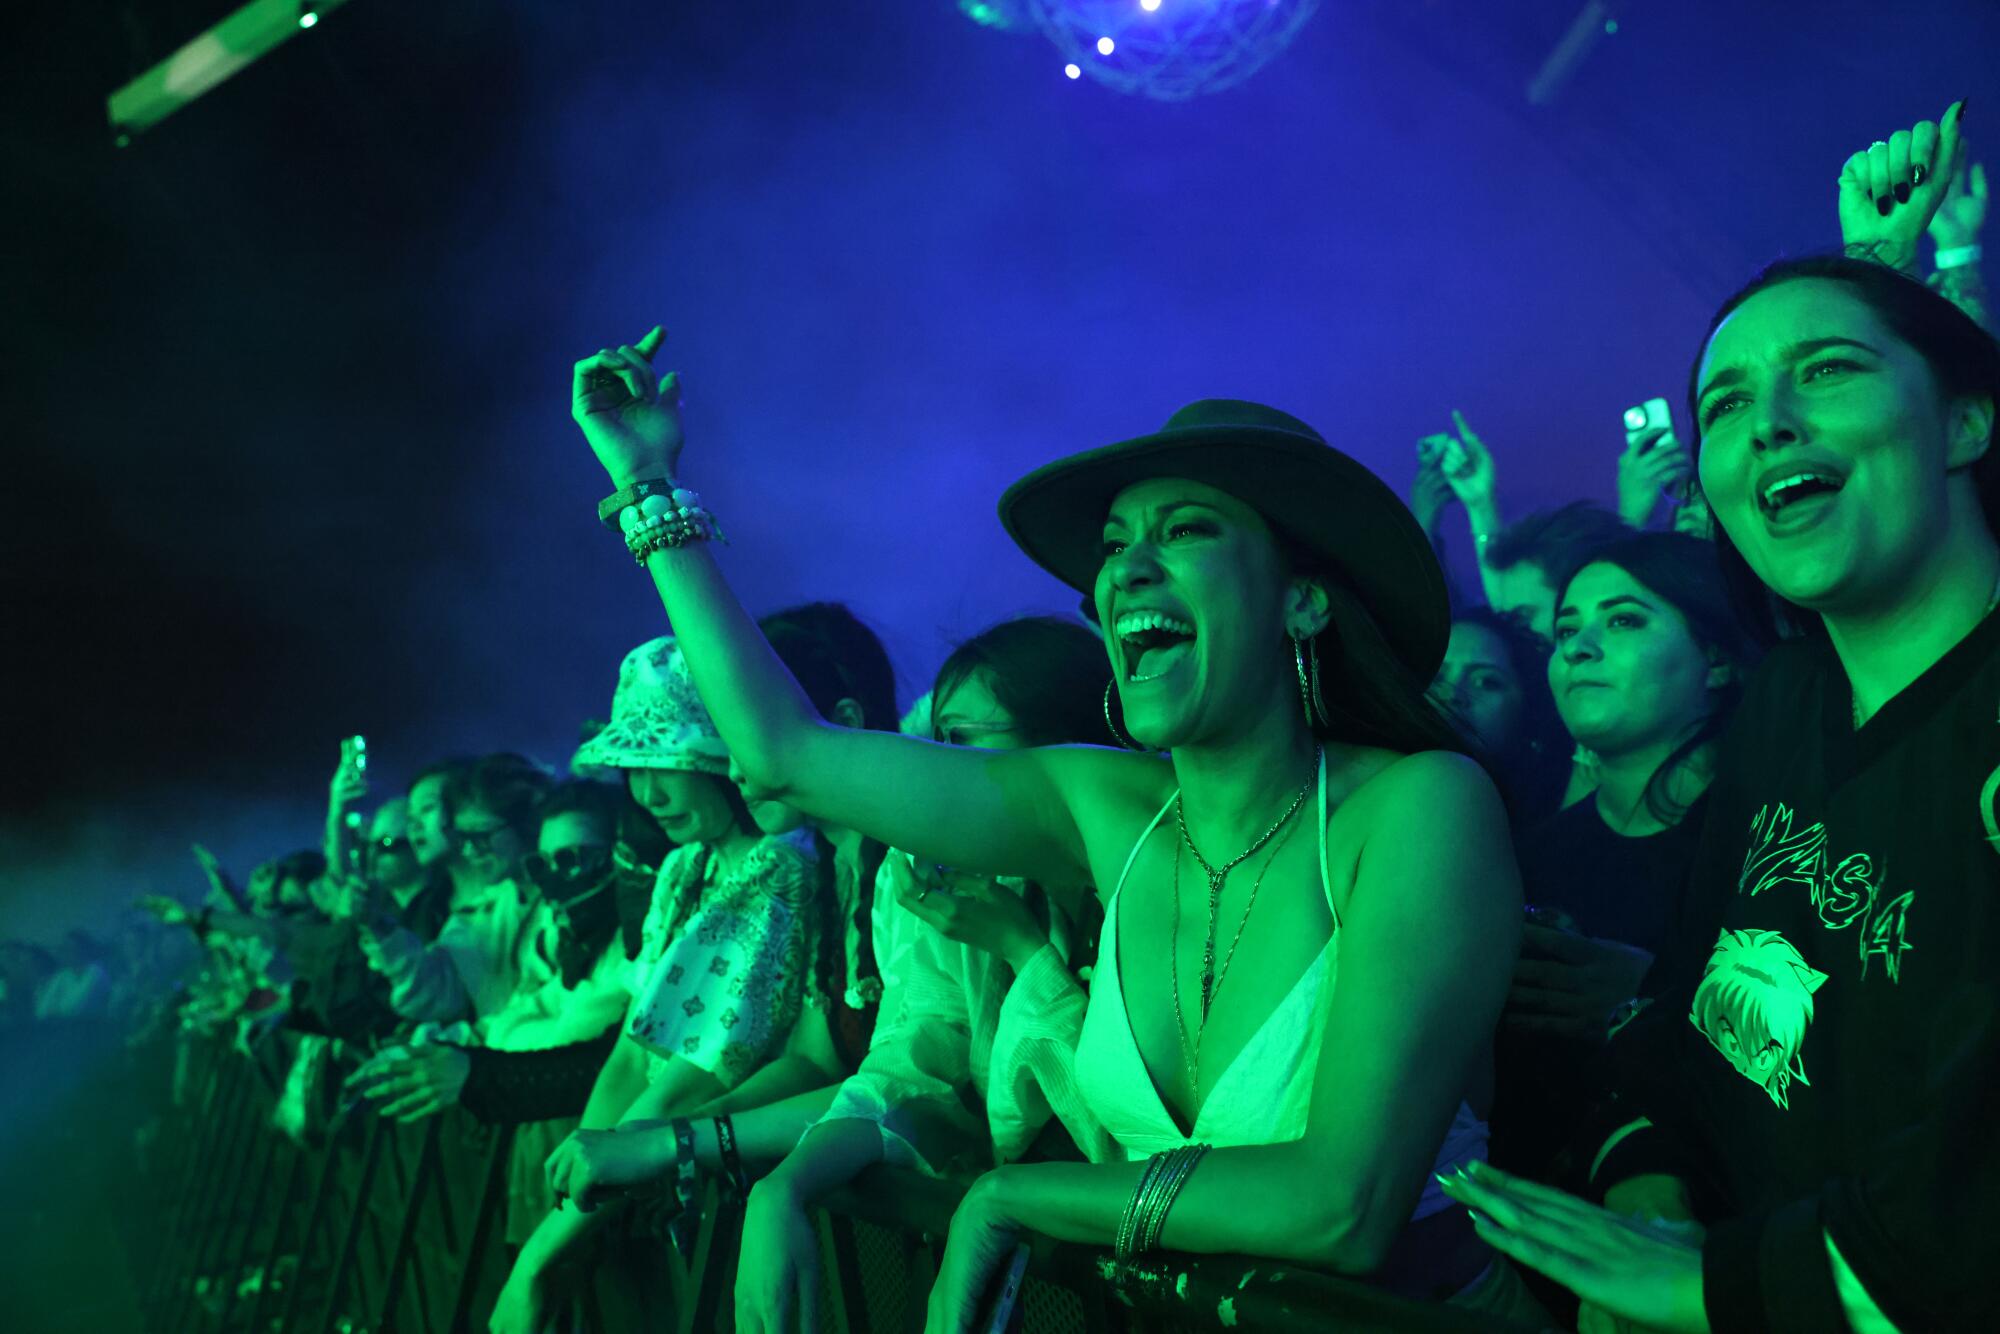 Fans watch Bizarrap perform at Coachella on Friday.